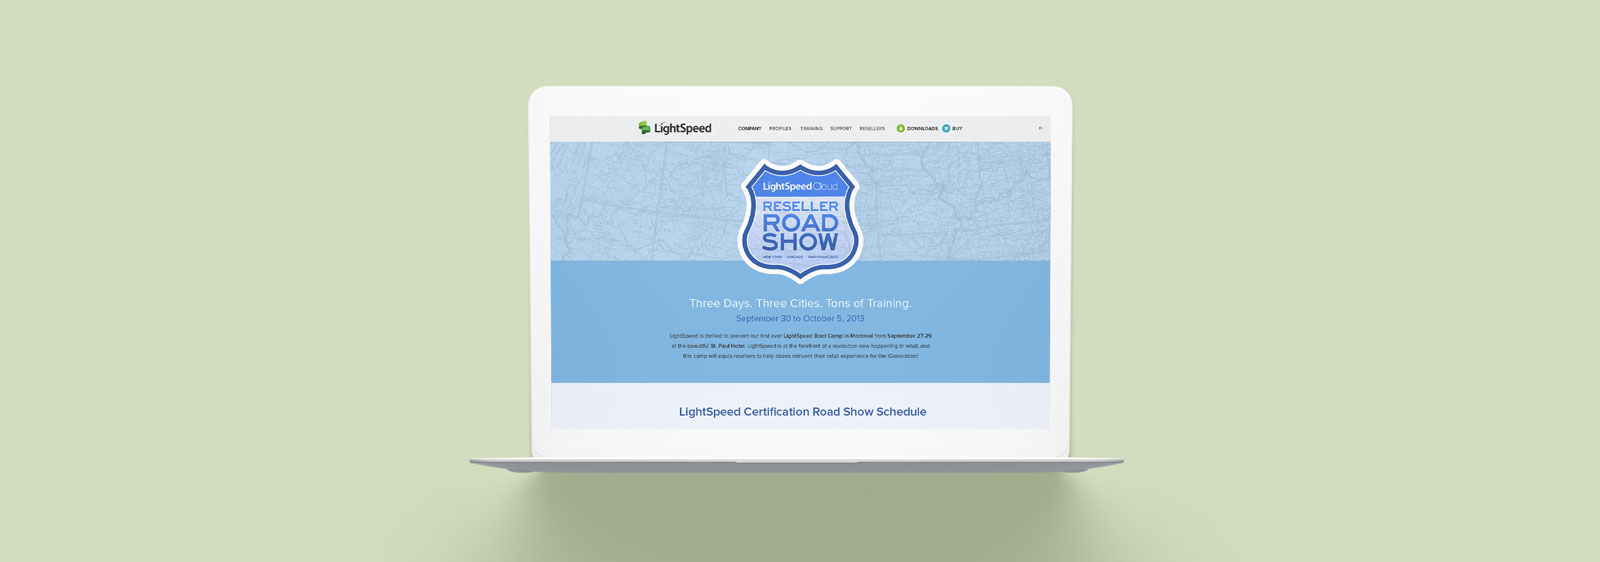 Lightspeed Reseller Road Show Website designed by Noisy Ghost Co.